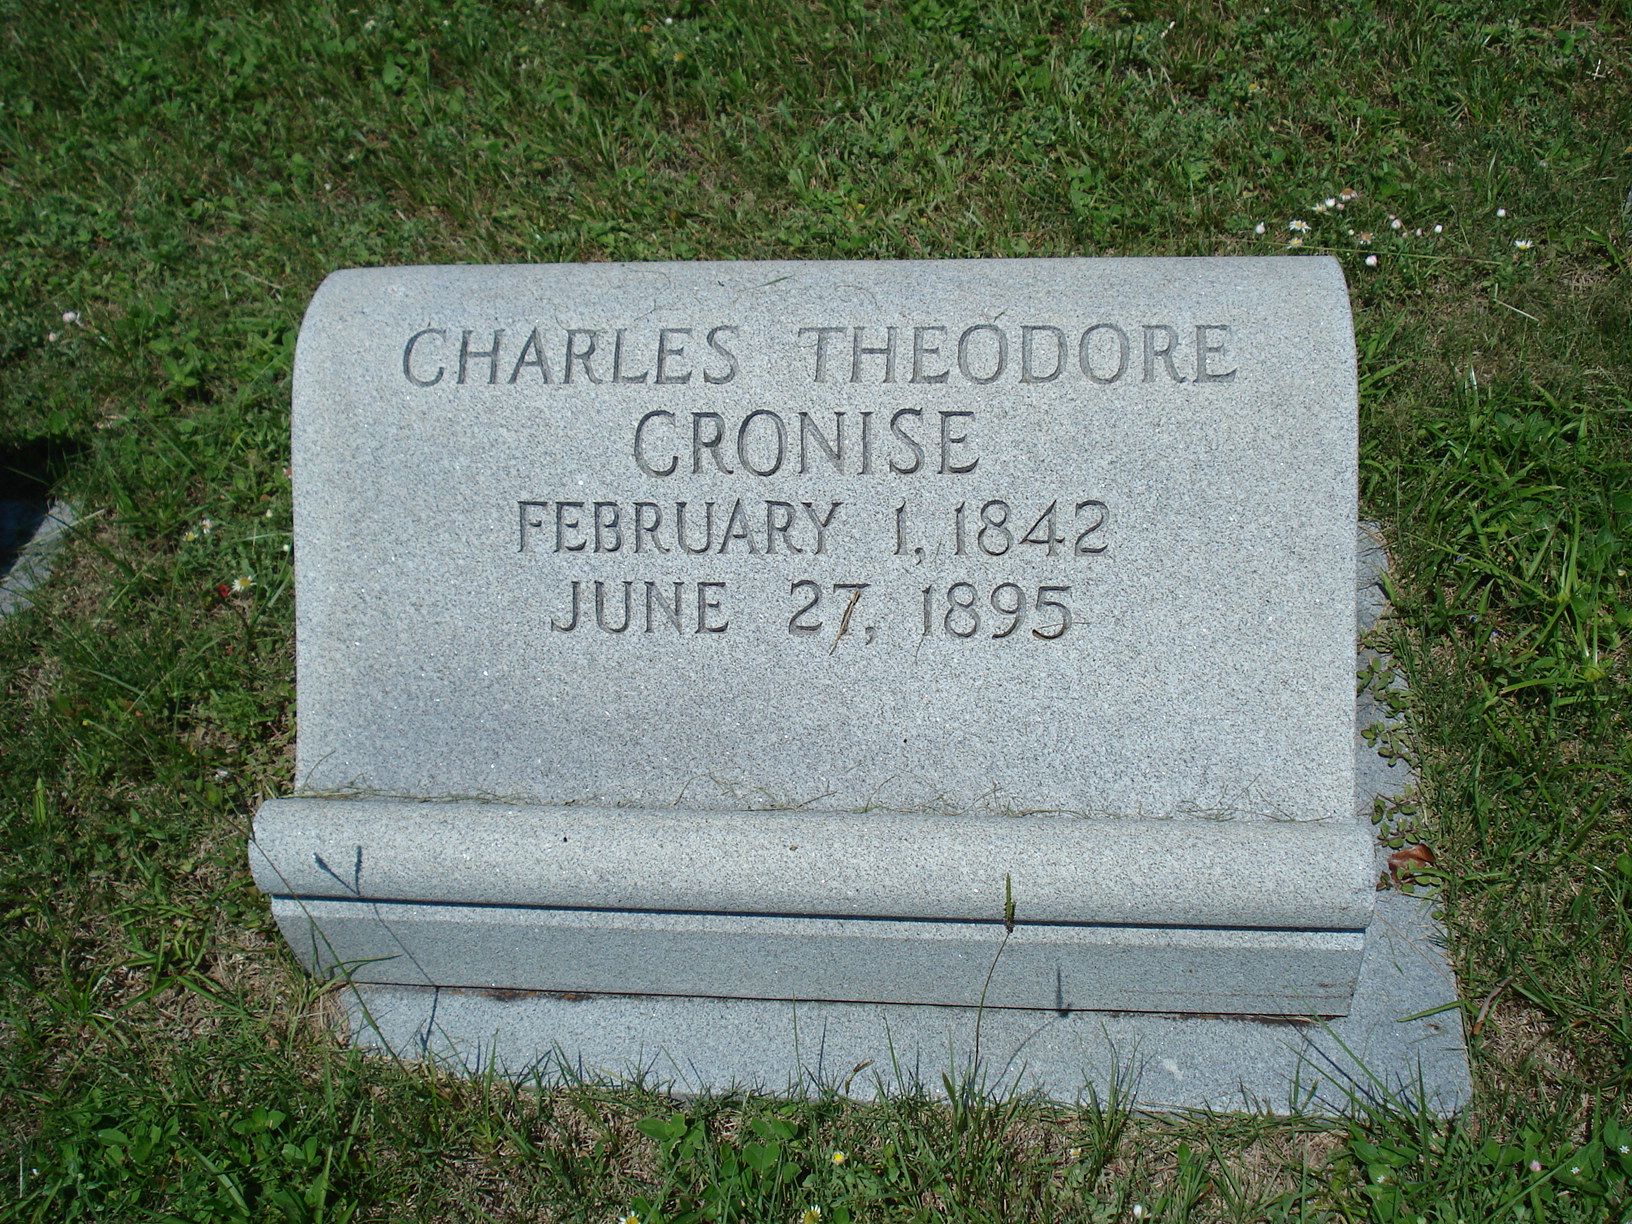 Charles Theodore Cronise